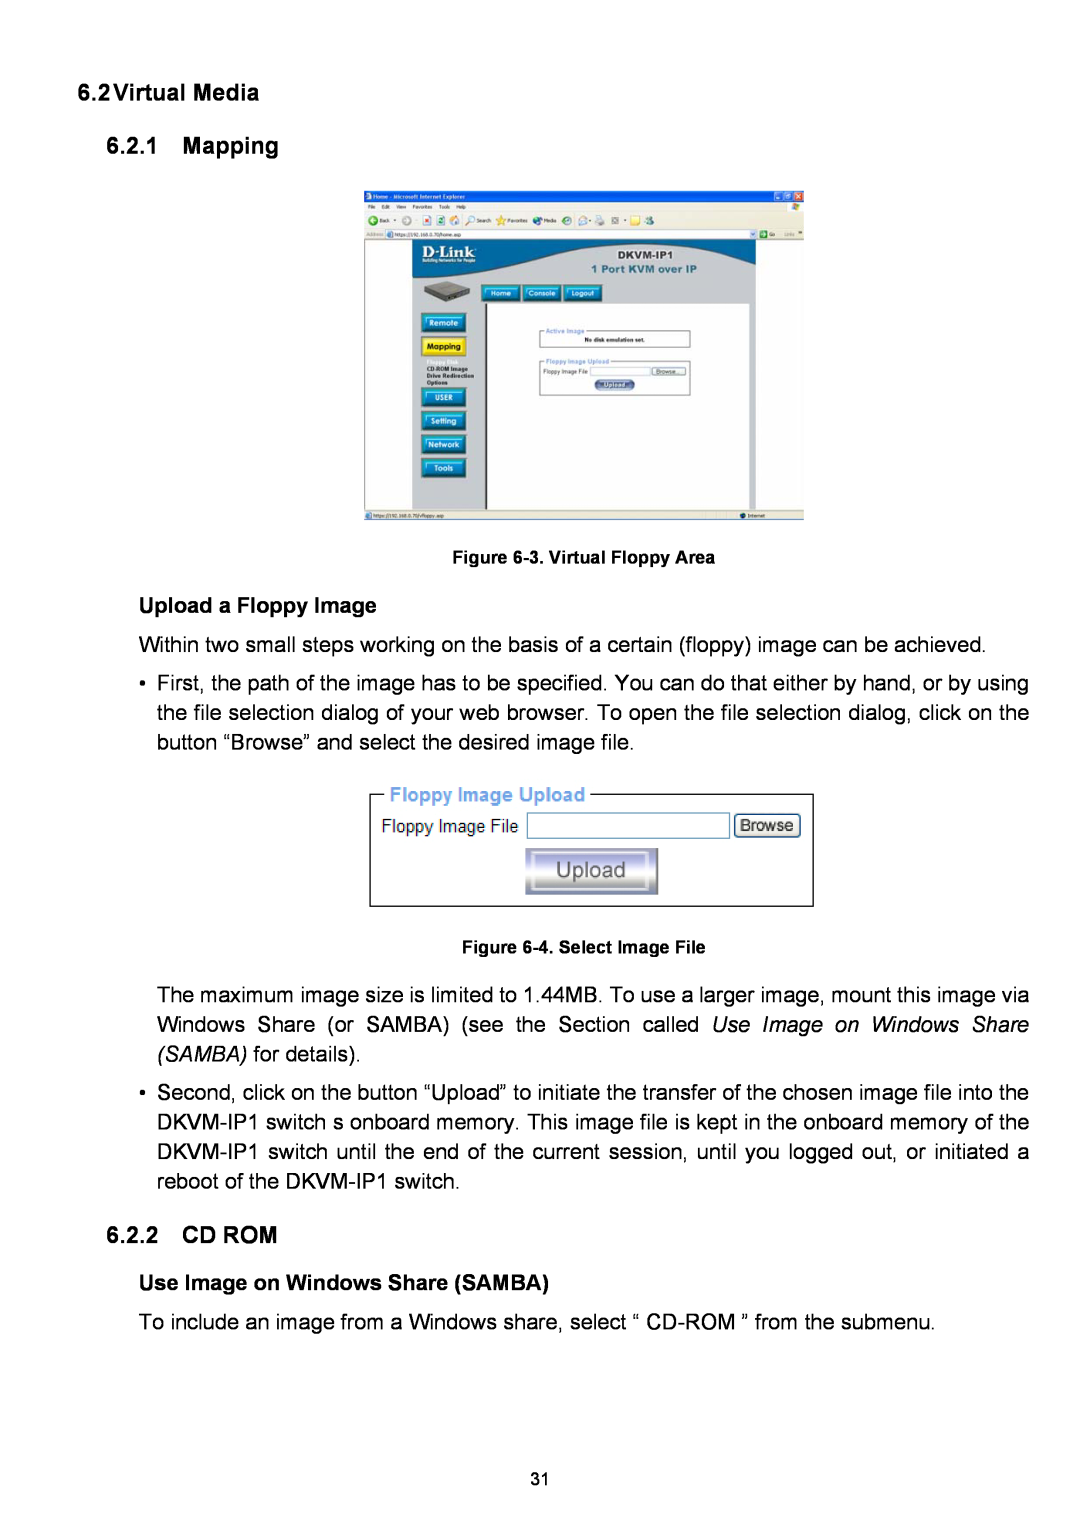 D-Link DKVM-IP1 manual Virtual Media 6.2.1 Mapping, Cd Rom, Upload a Floppy Image, Use Image on Windows Share SAMBA 